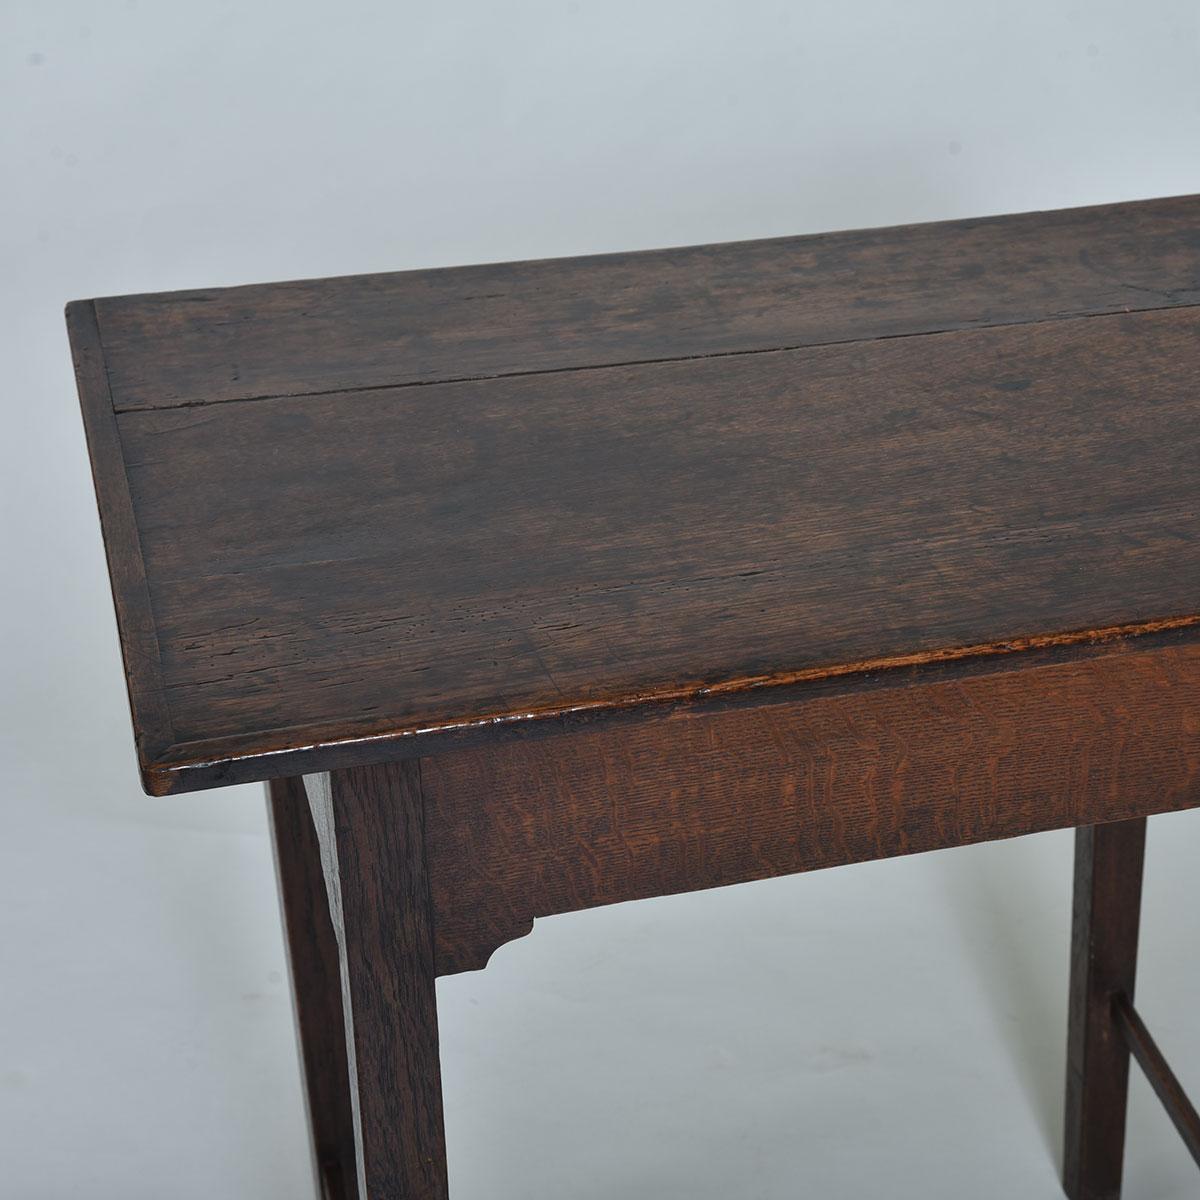 18th century Small Oak Side Table